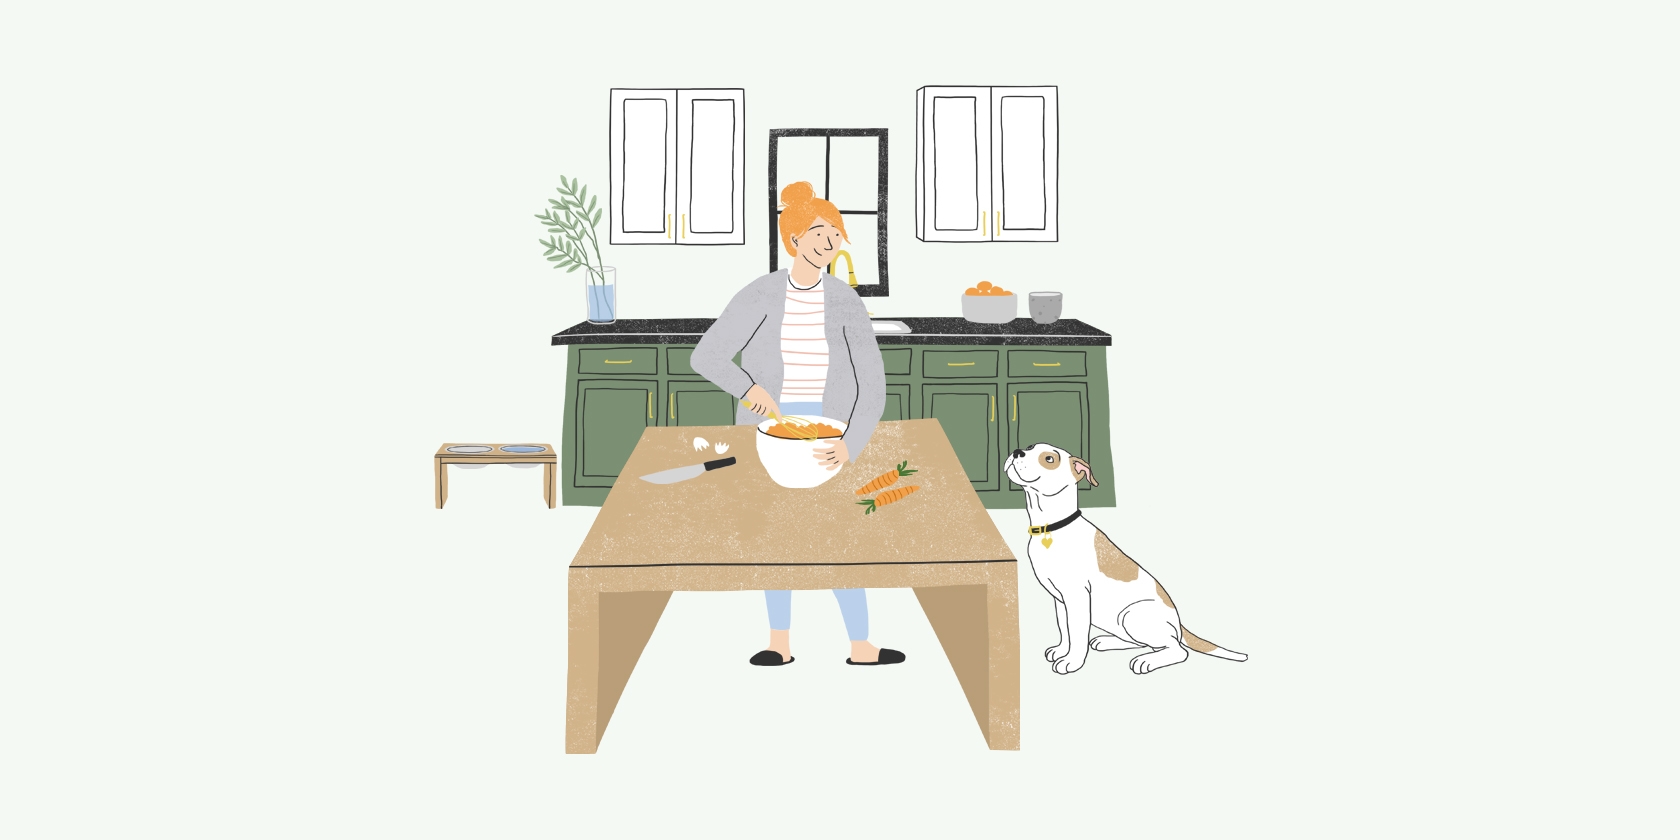 Woman baking treats with dog